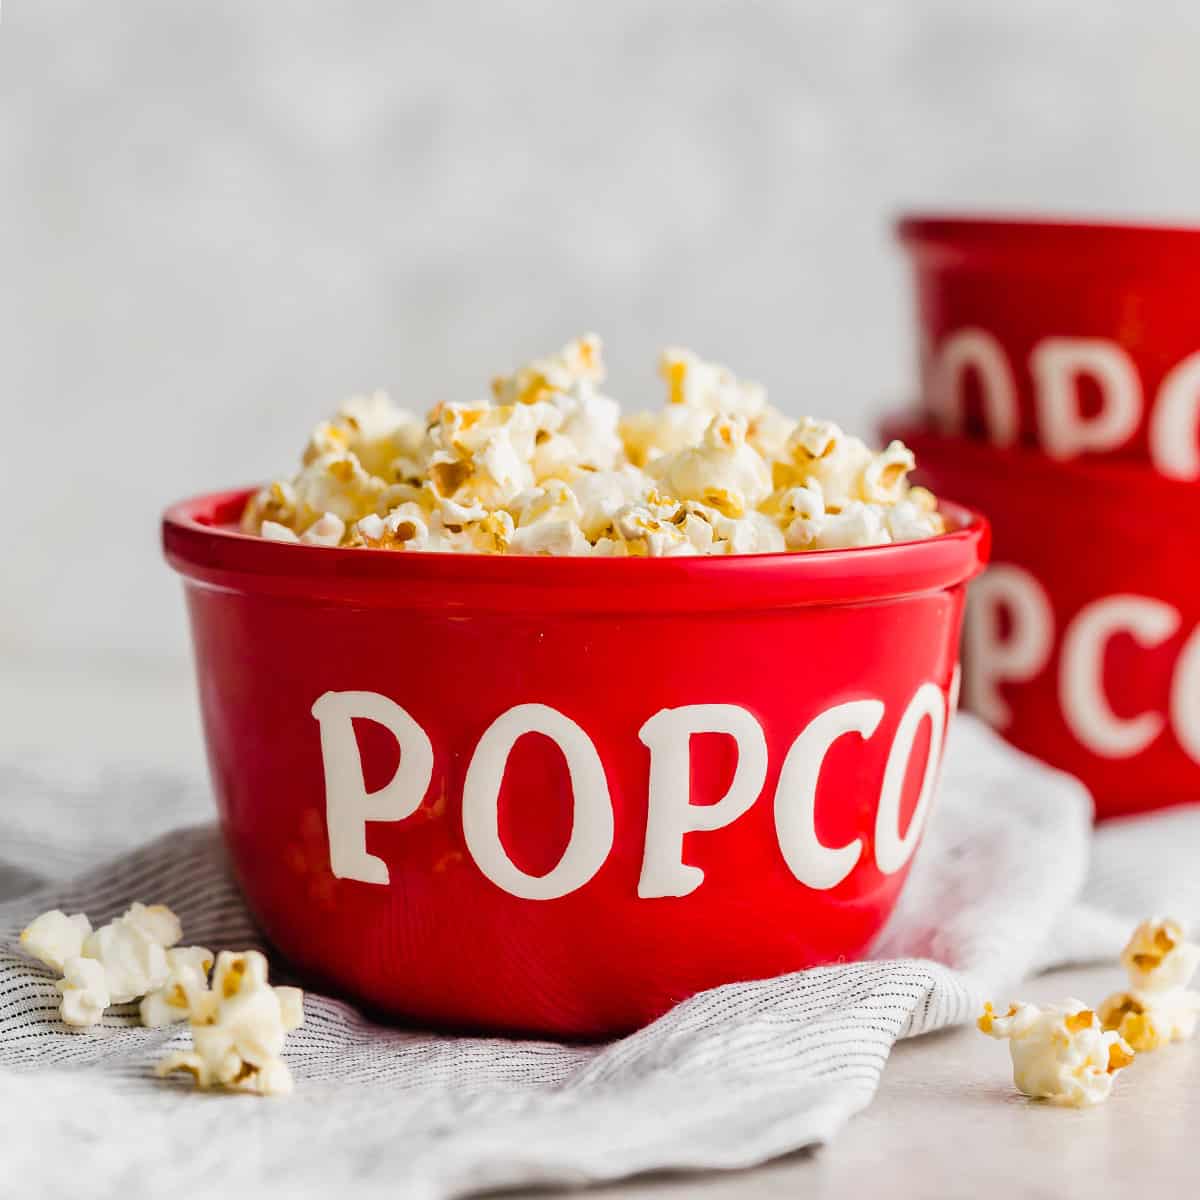 https://saltandbaker.com/wp-content/uploads/2019/10/movie-theater-popcorn-square.jpg